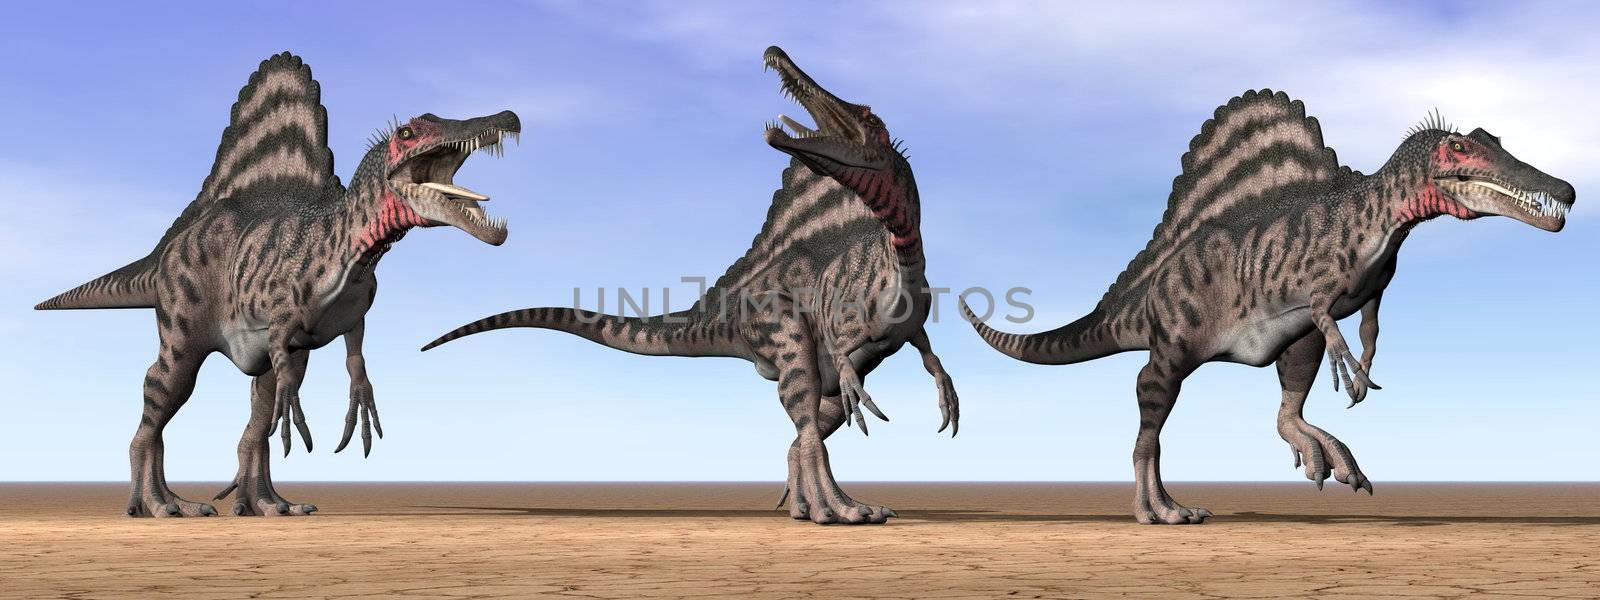 Three spinosaurus dinosaurs standing in the desert by daylight